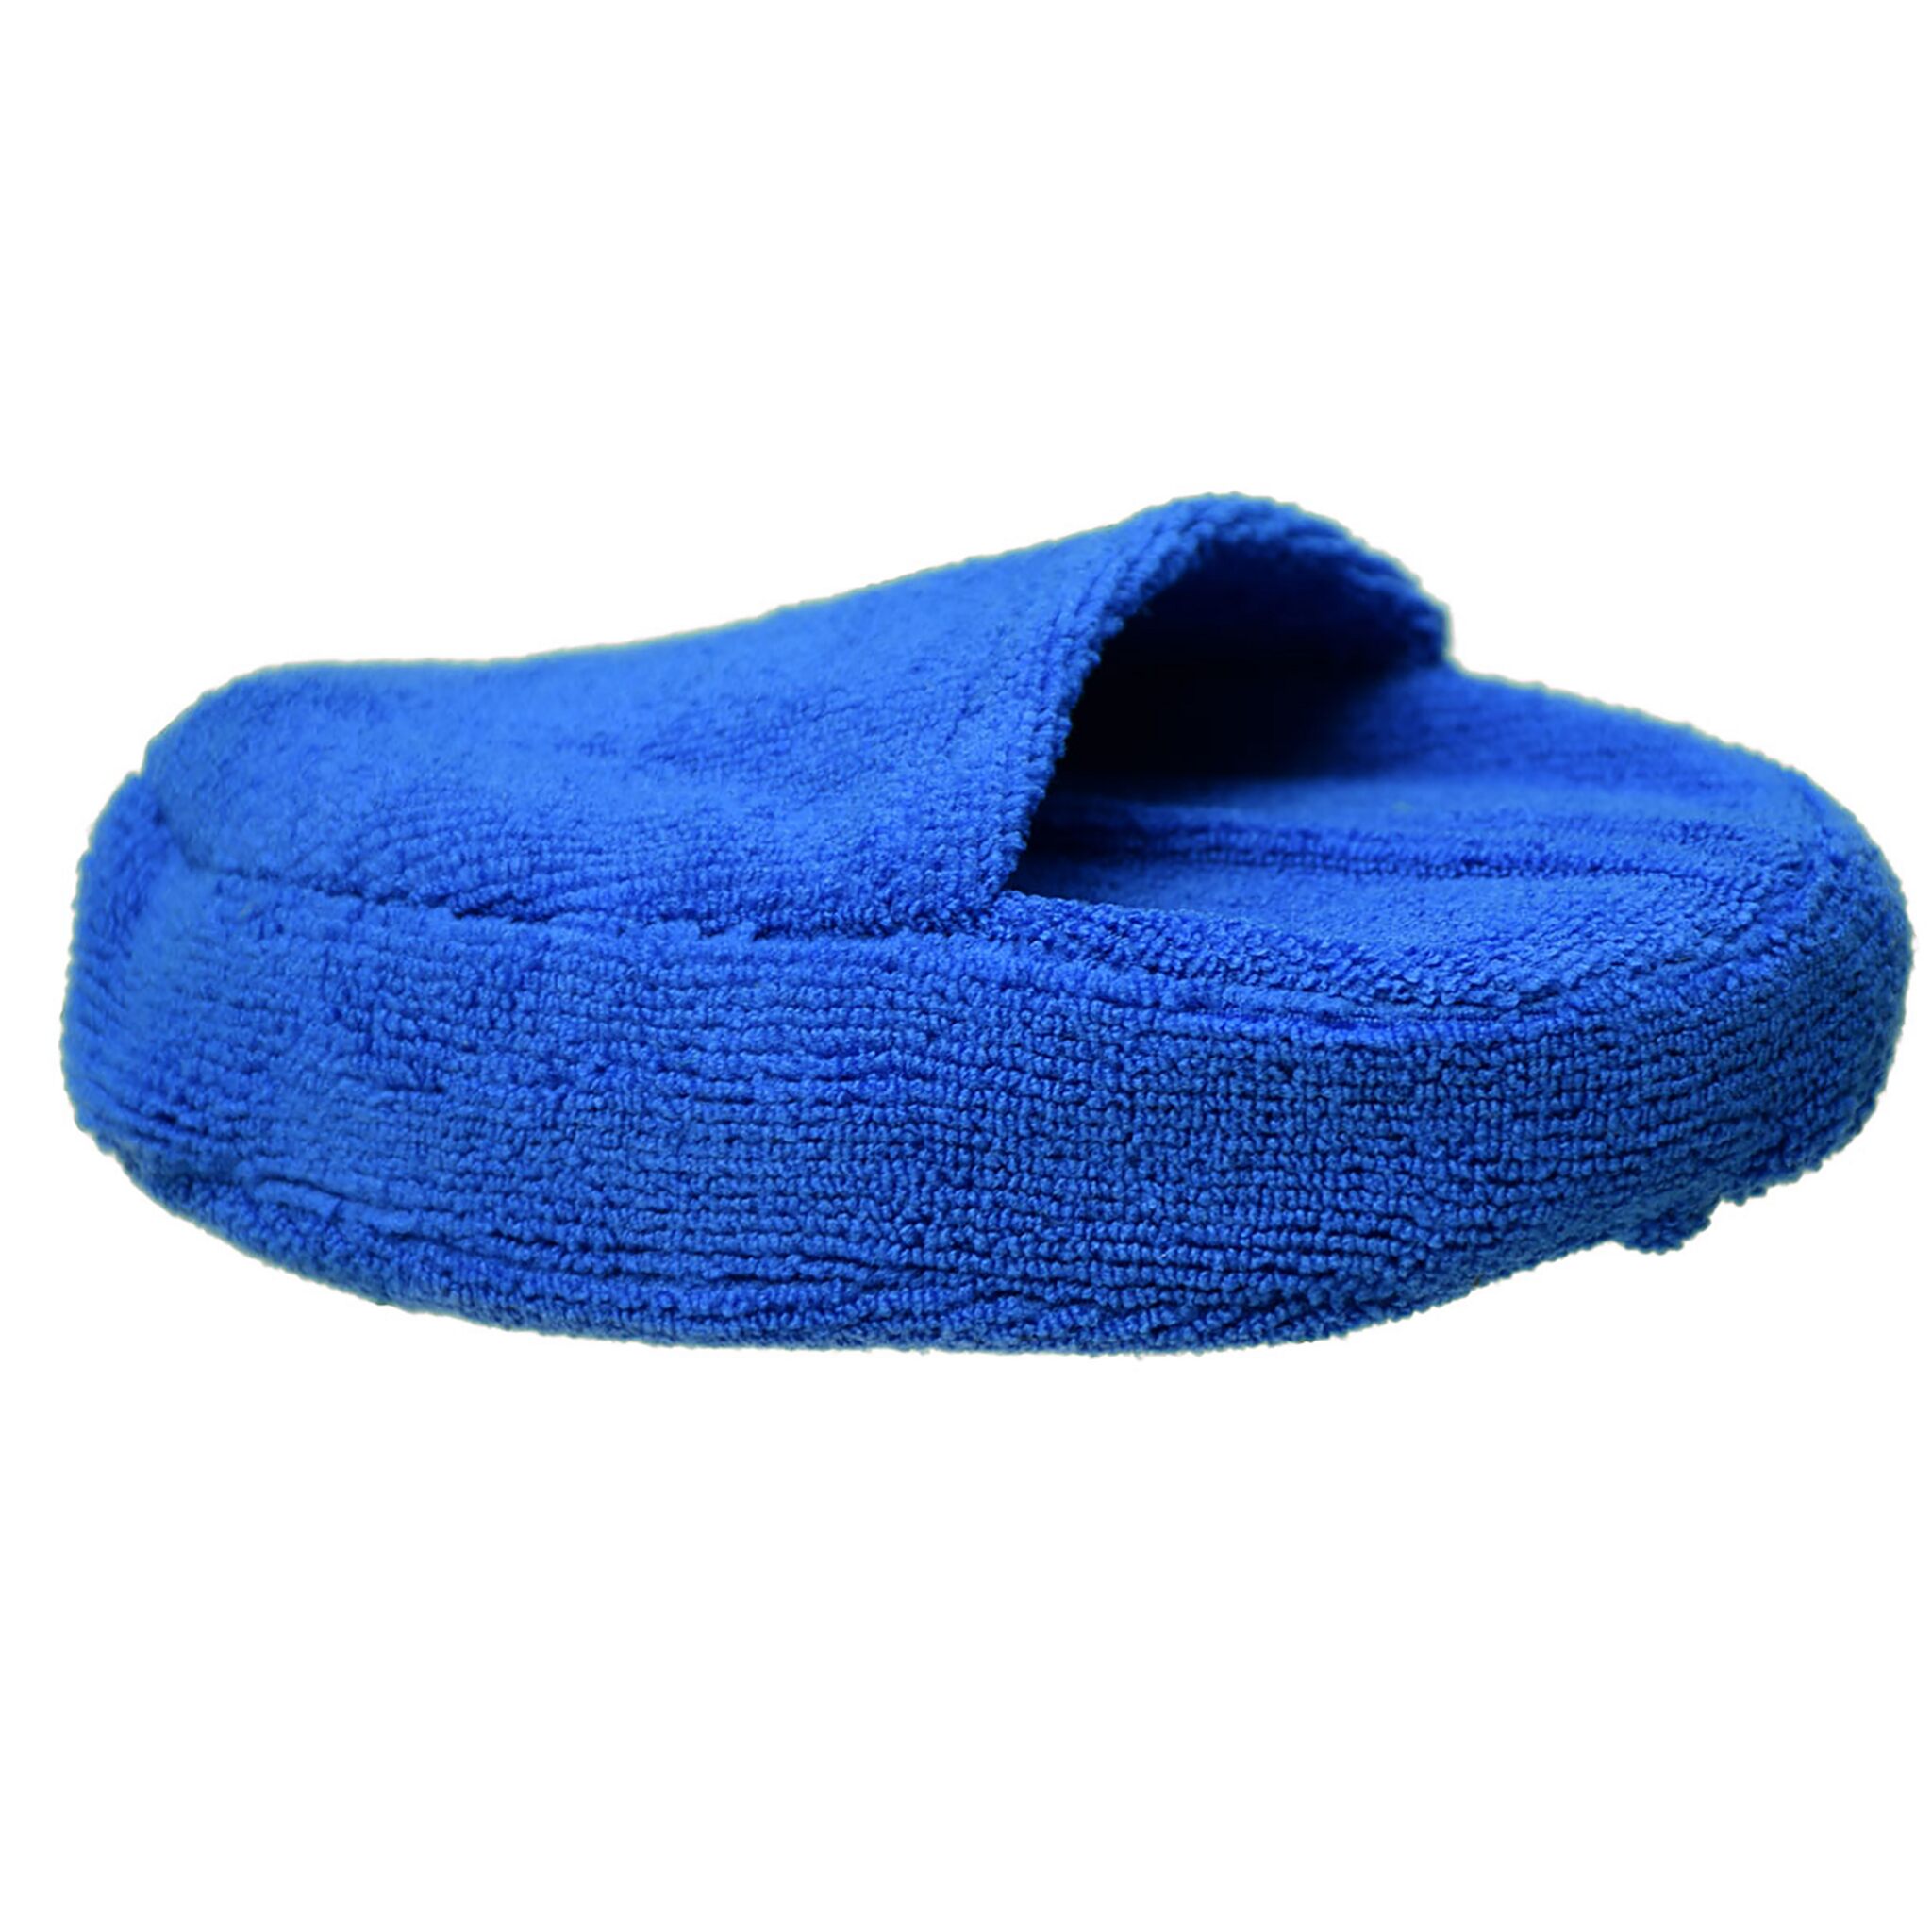 Hand-Waschpad in blau